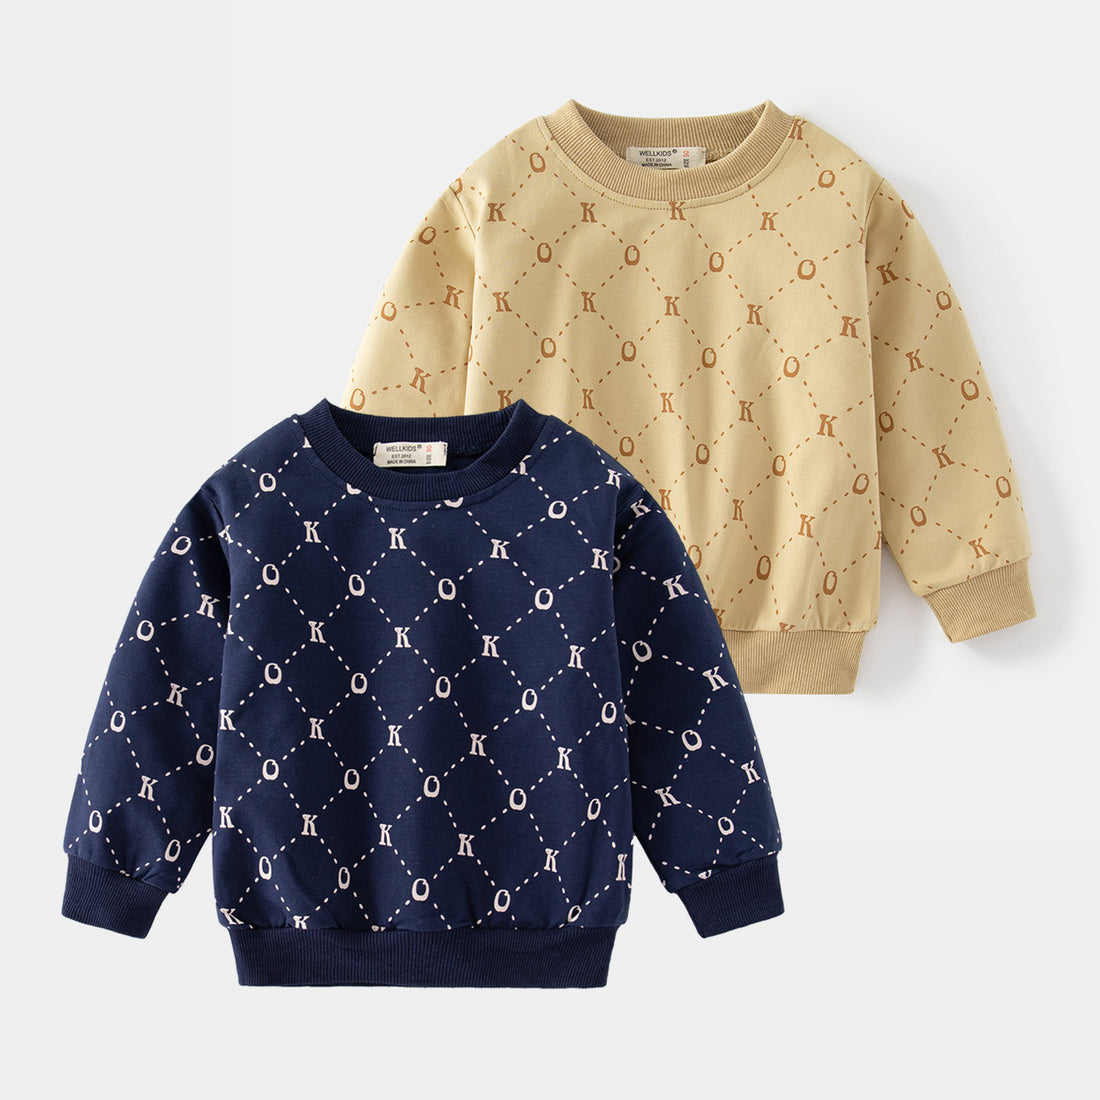 [513654] - Atasan Sweater Crewneck Lengan Panjang Import Anak Laki-Laki - Motif Dotted Line